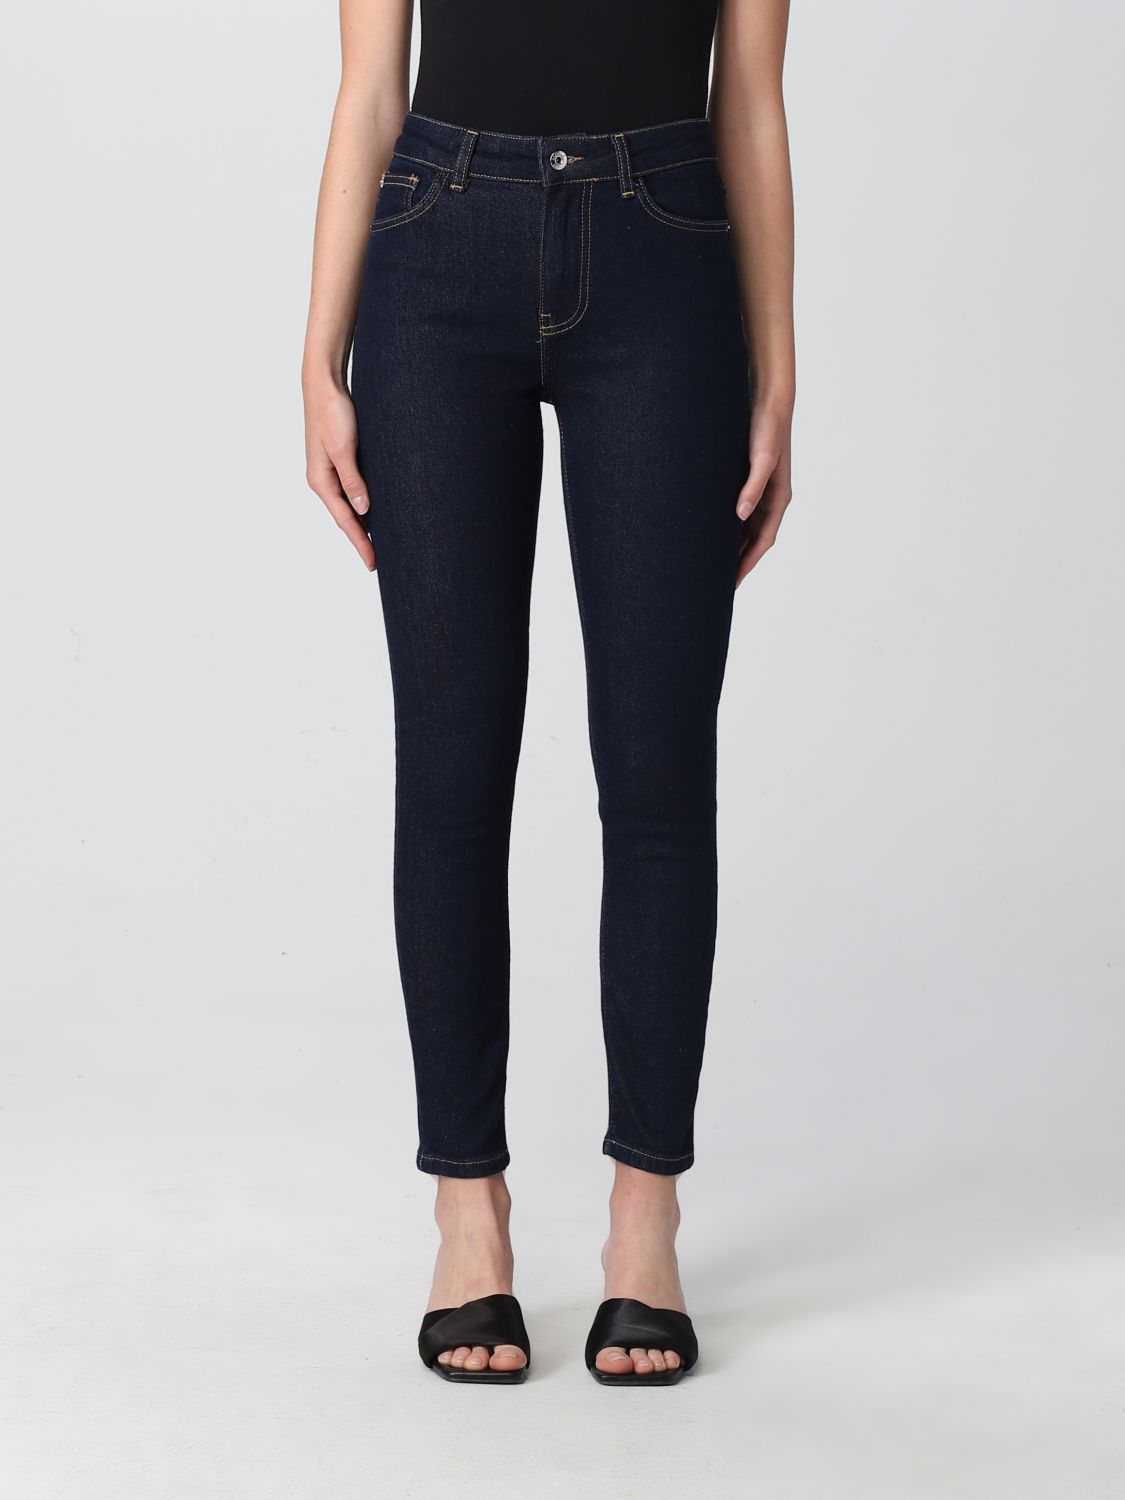 Jeans Actitude Twinset: Twinset-Actitude 5-pocket jeans in denim denim 1